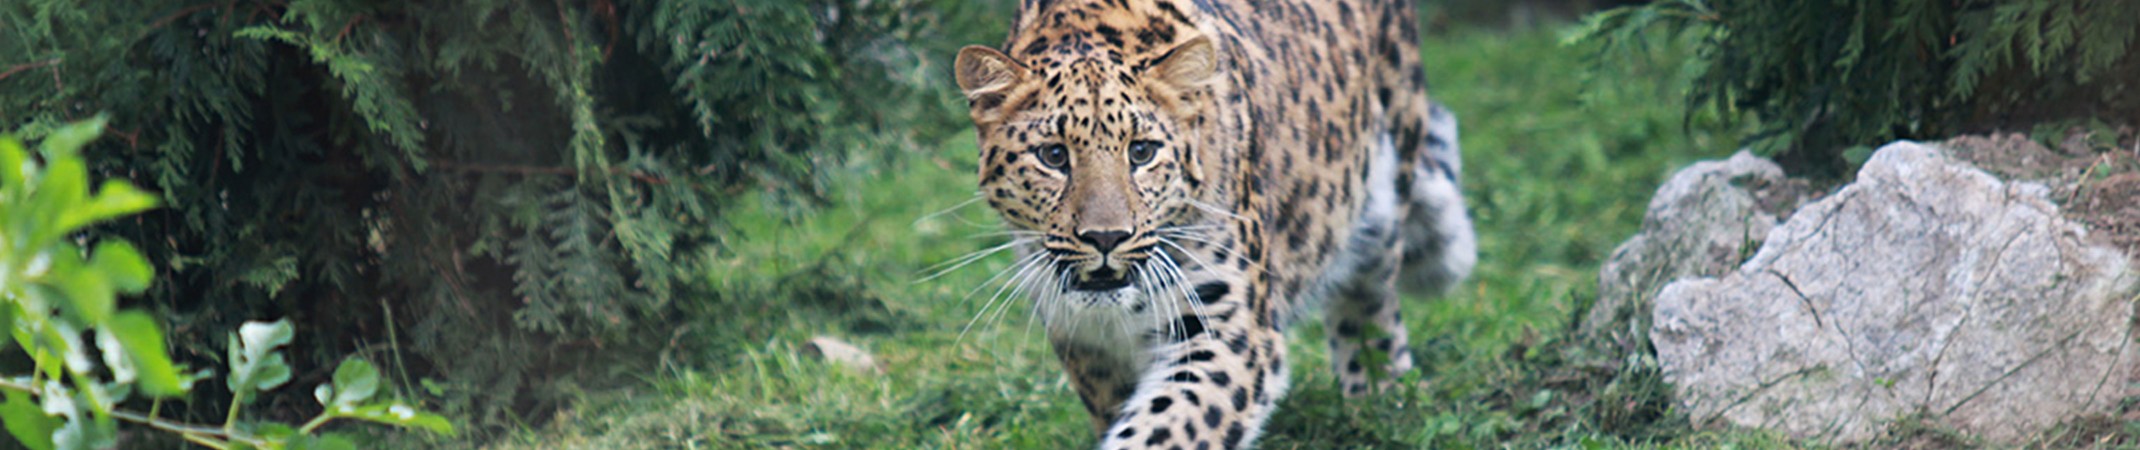 amur leopard habitat forest